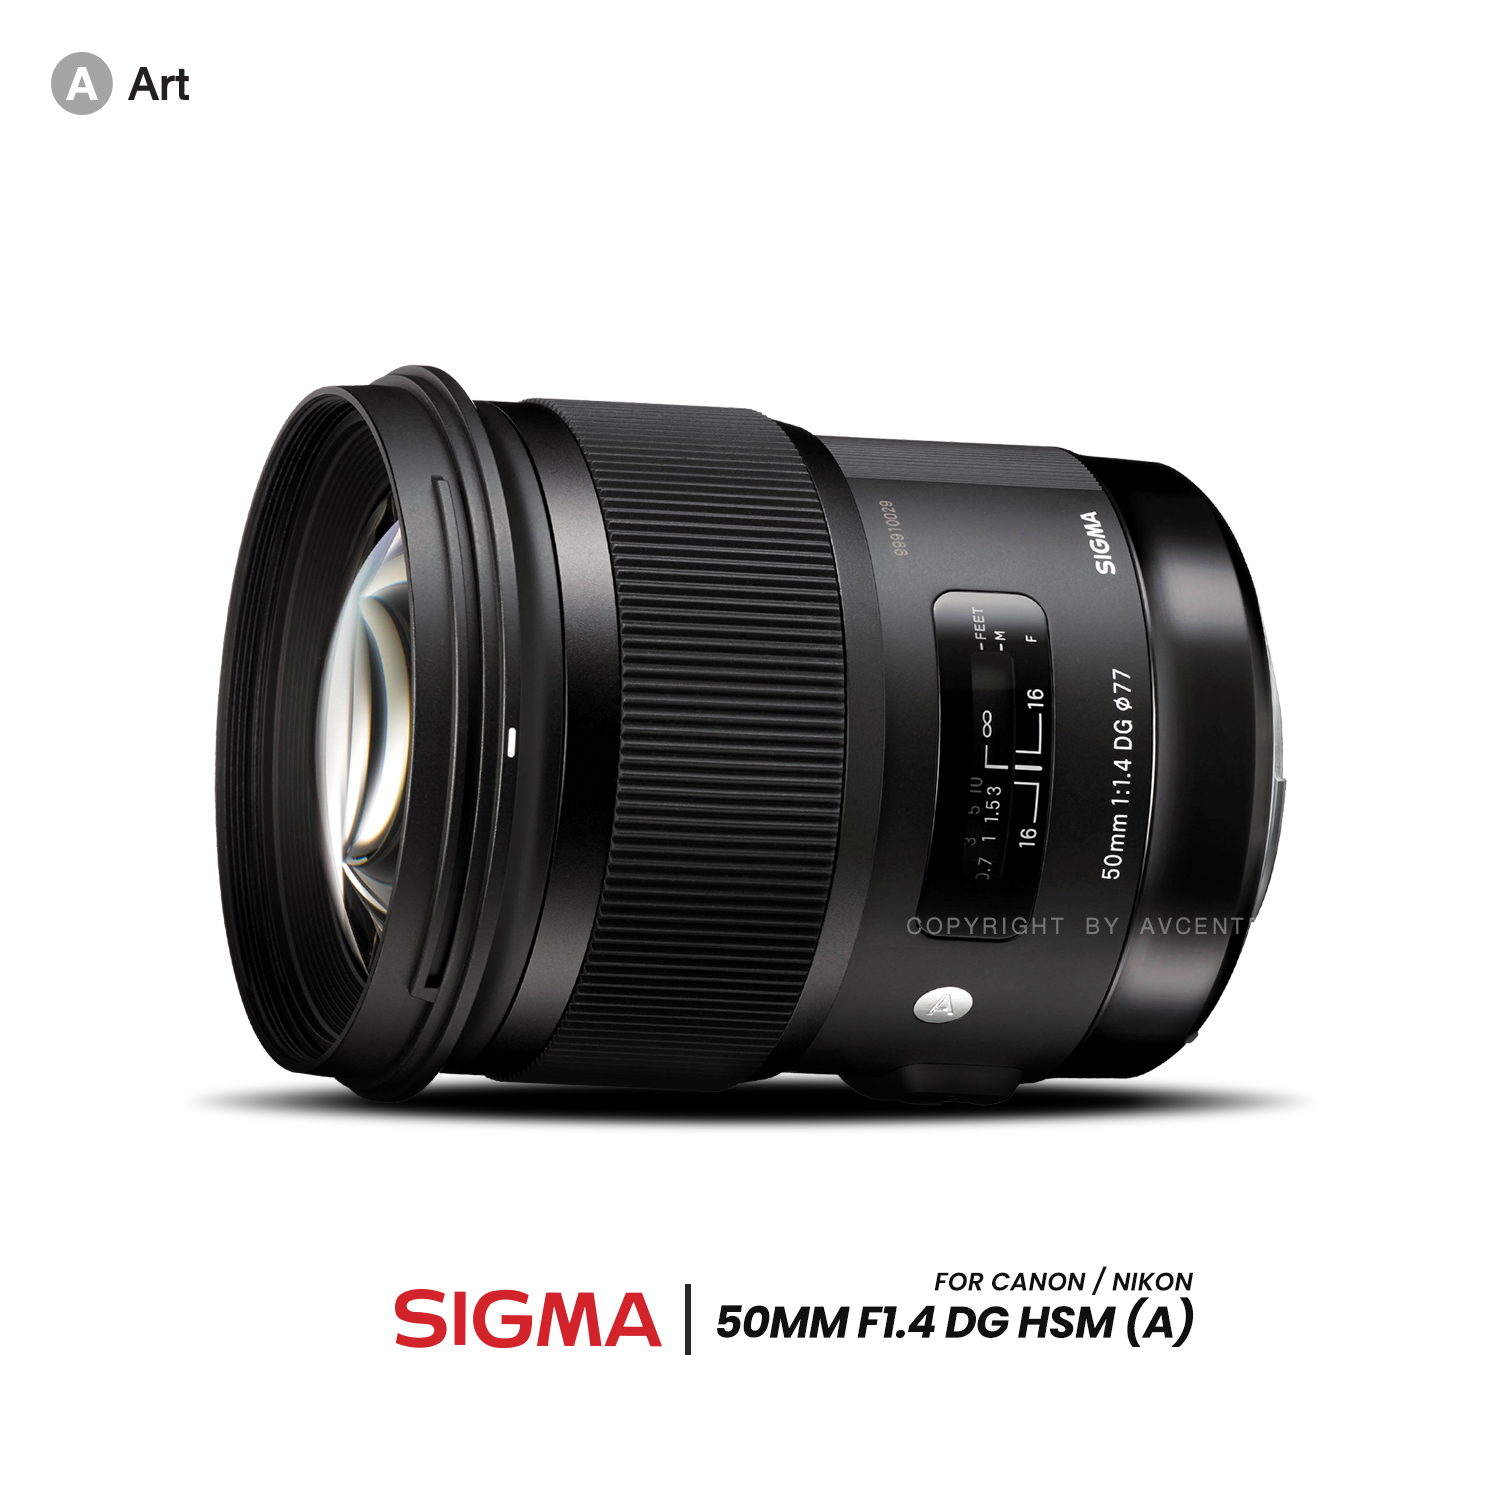 Sigma Lens 50 mm. F1.4 DG HSM (A) (canon/nikon)